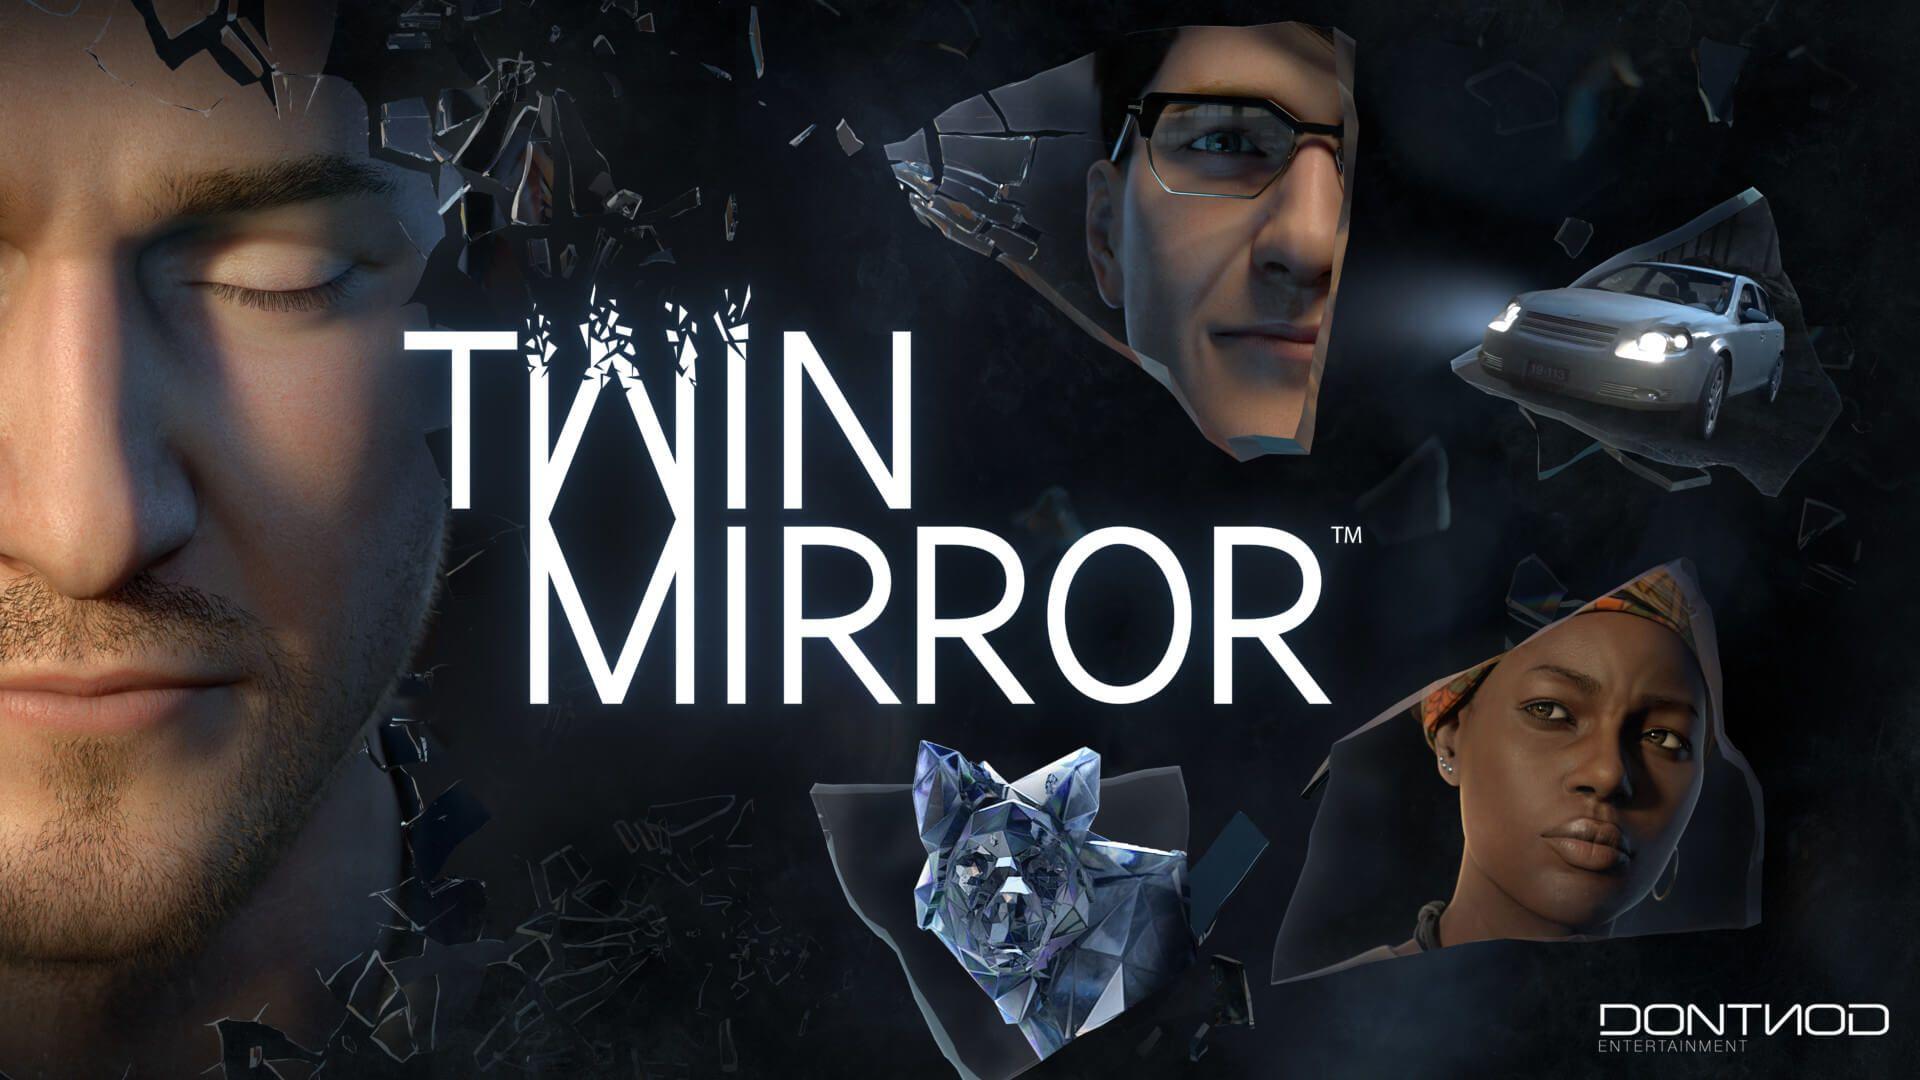 Twin mirror Keyart 04 16x9